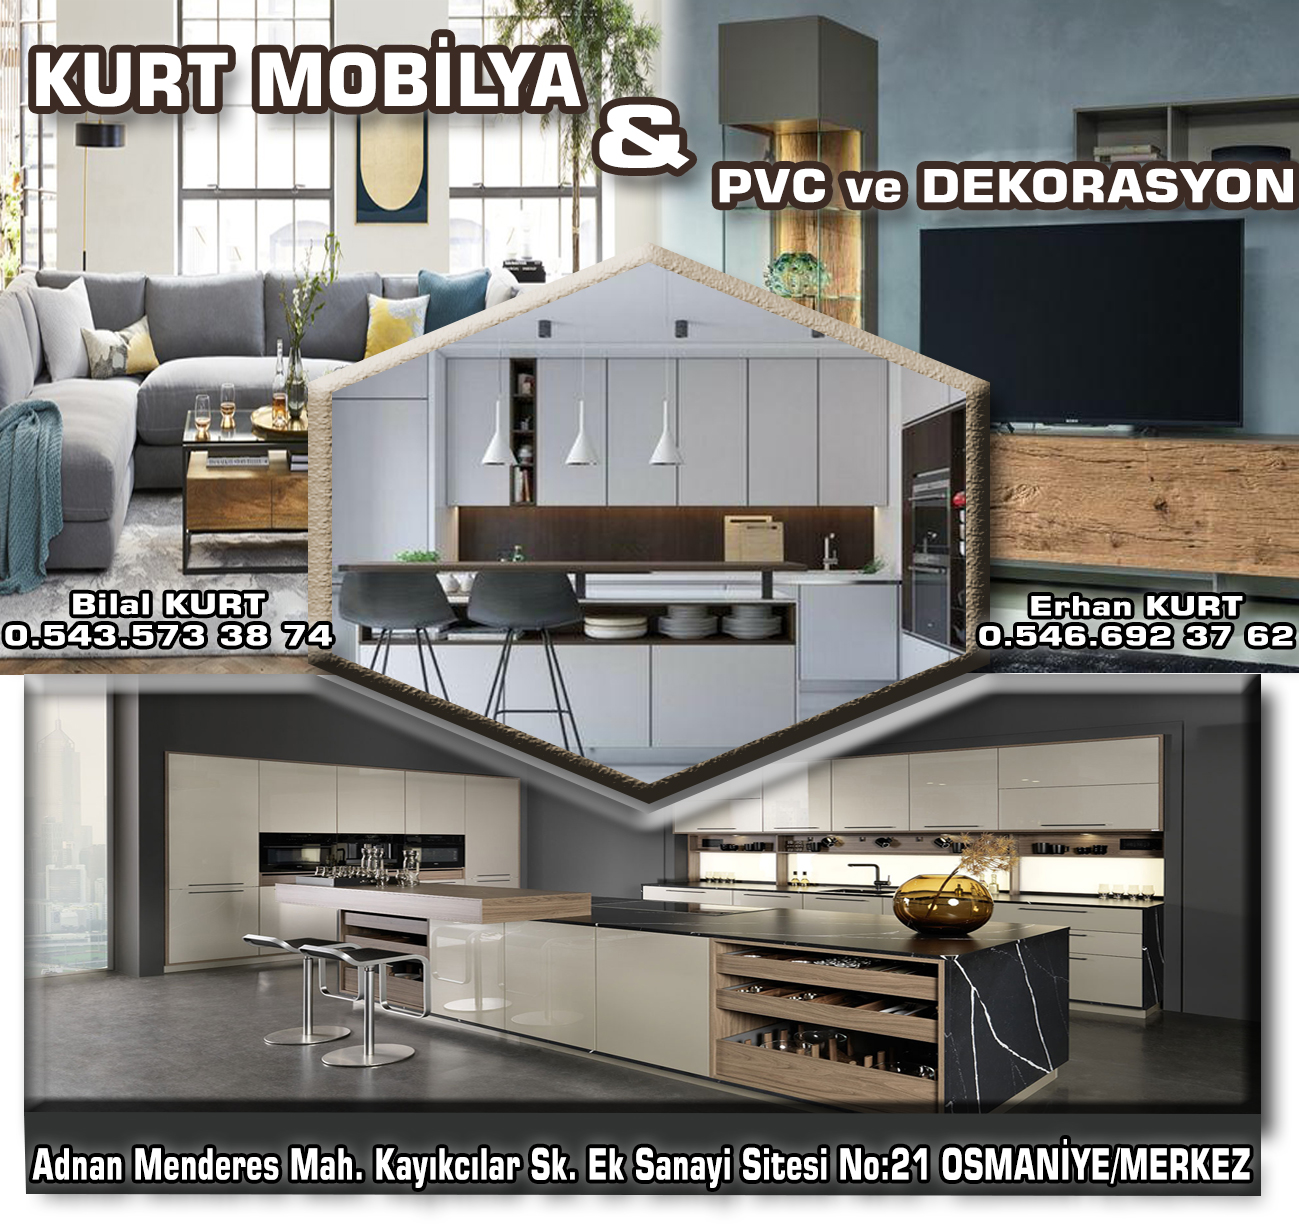 kurt-mobilya-pvc-dekorasyon-osmaniye